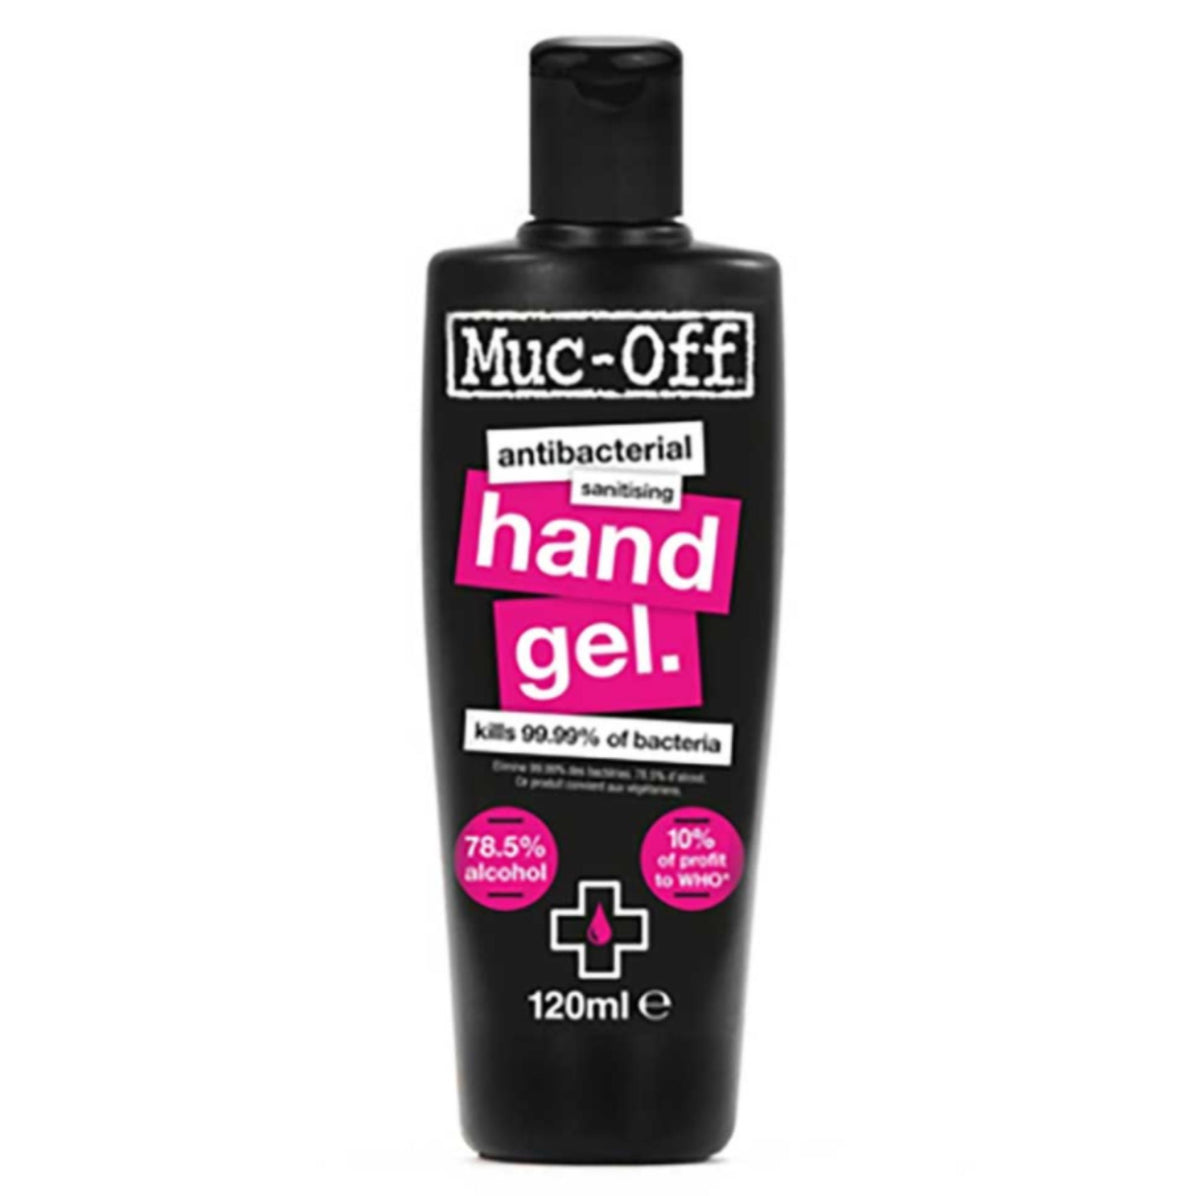 Muc-Off Antibacterial Hand Gel 120ml